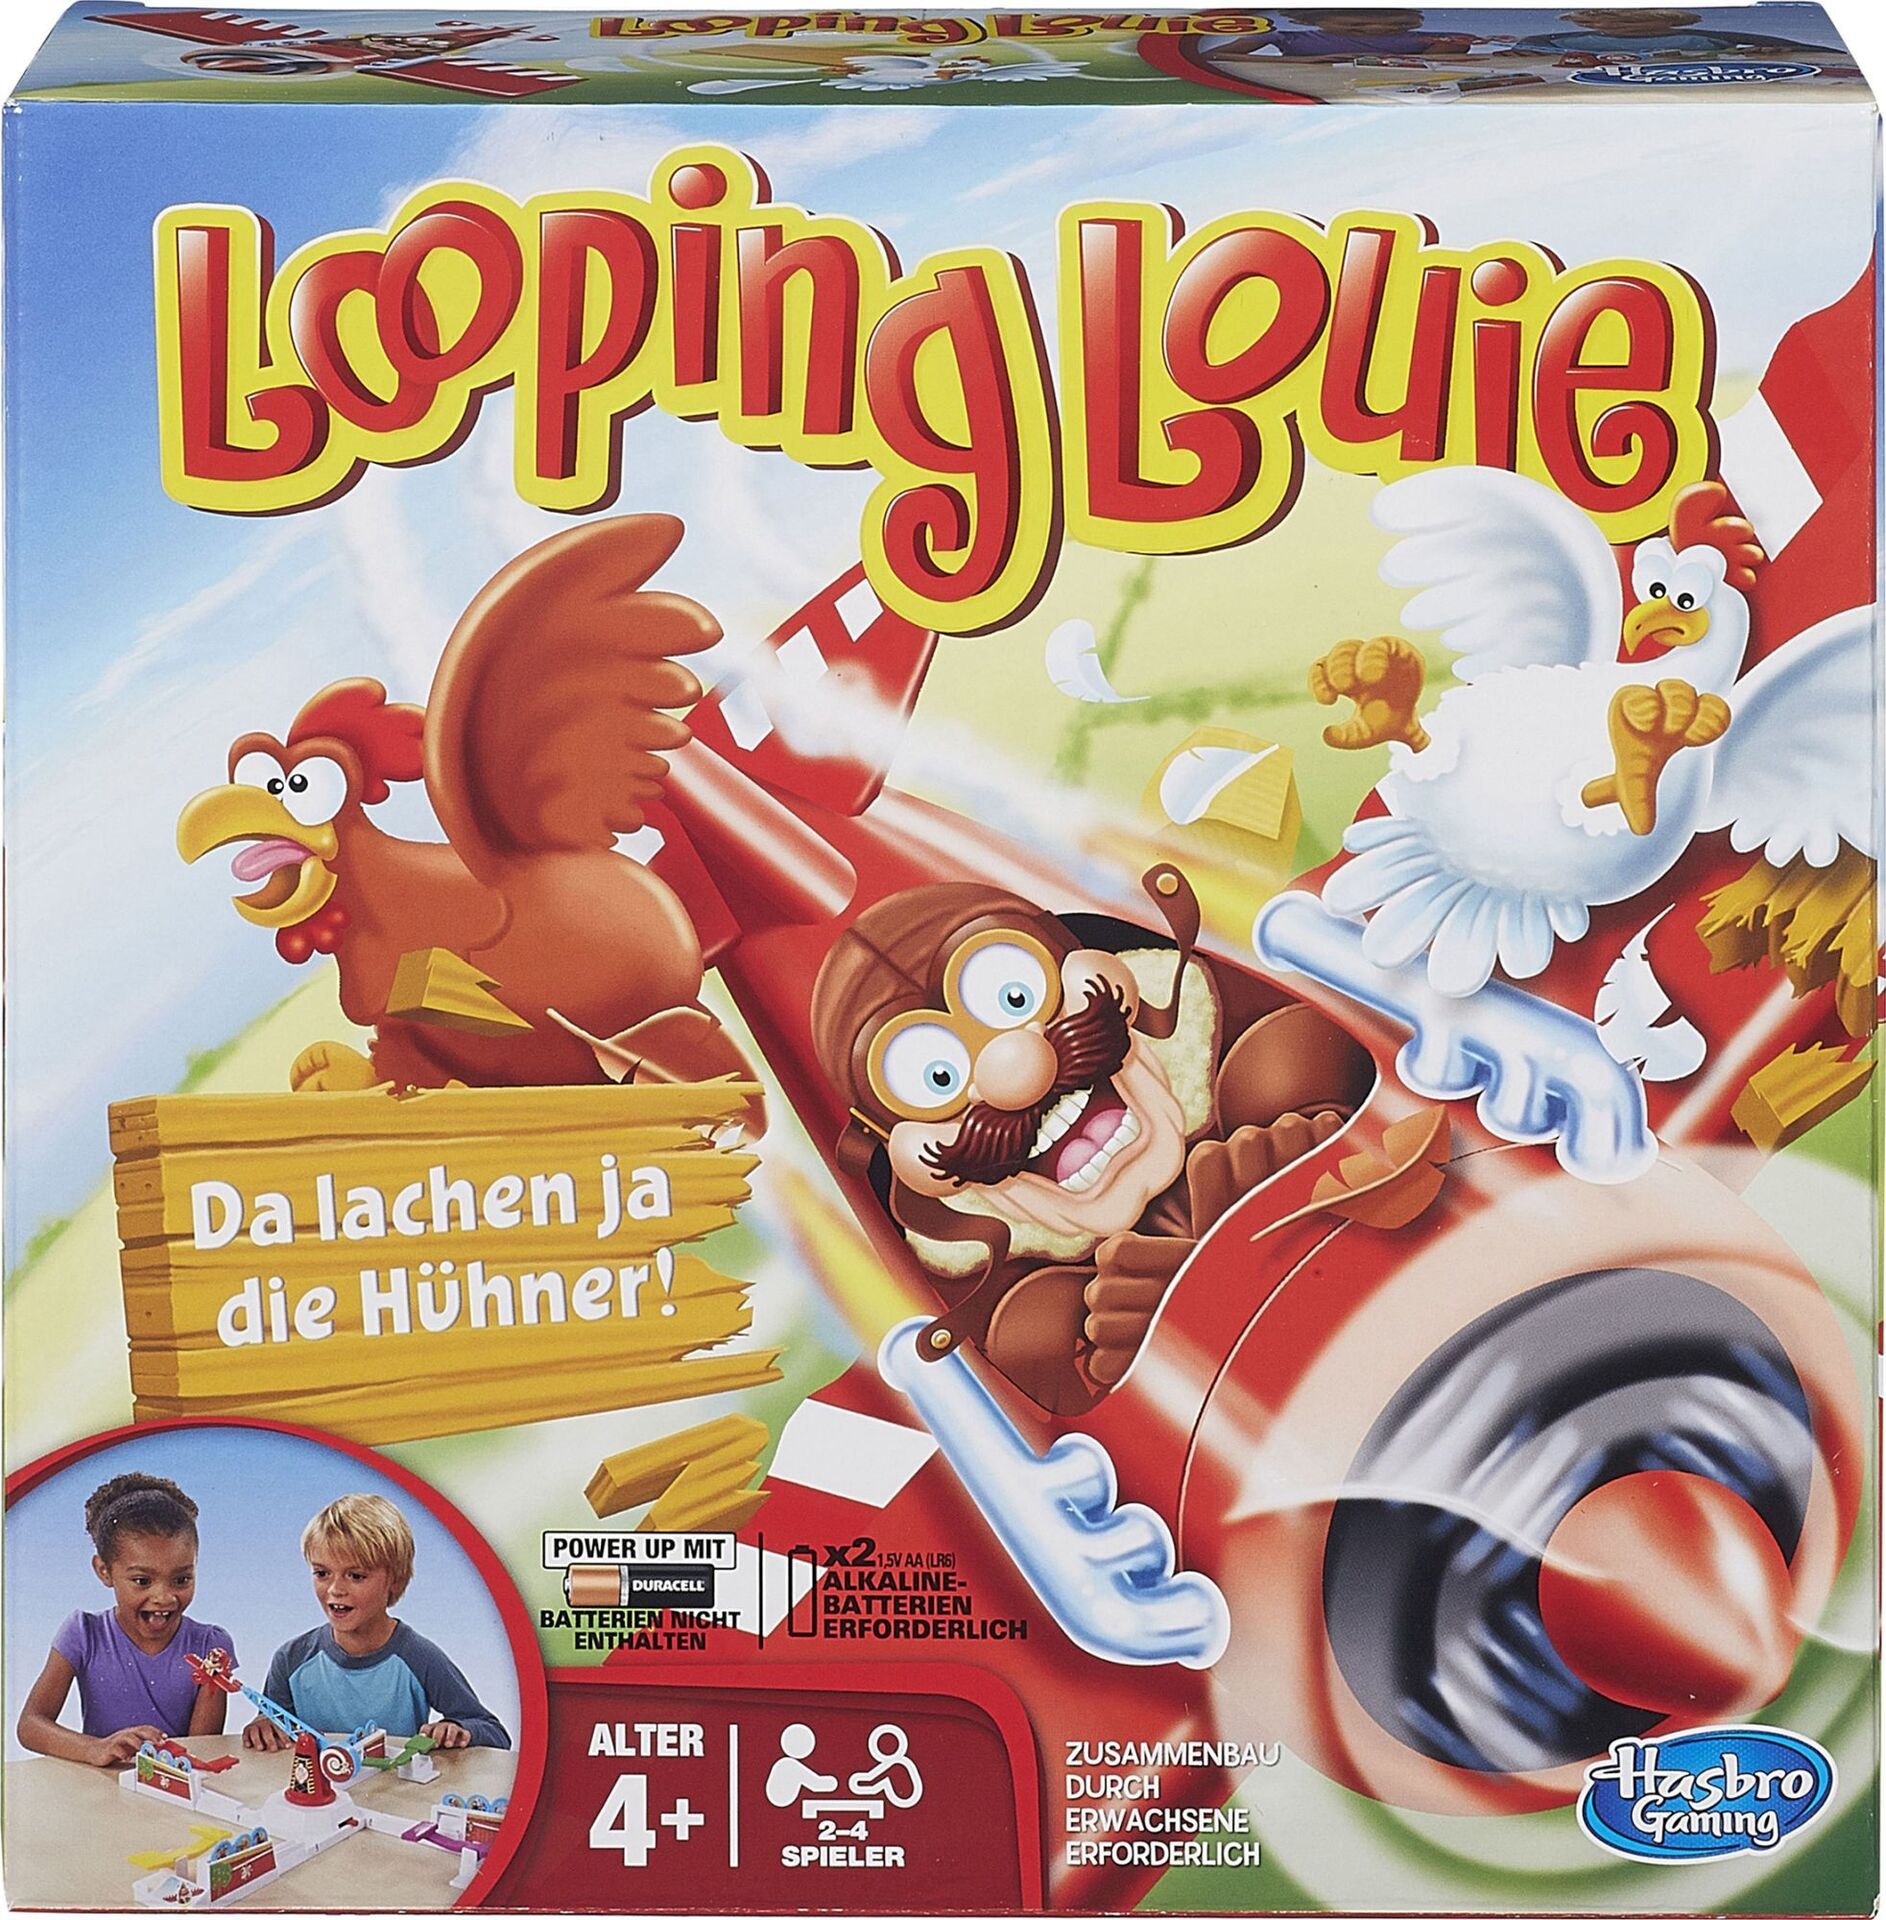 Looping Louie, d ab 4 Jahren, 2-4 Spieler, Batterien 2xAA LR06 exkl.